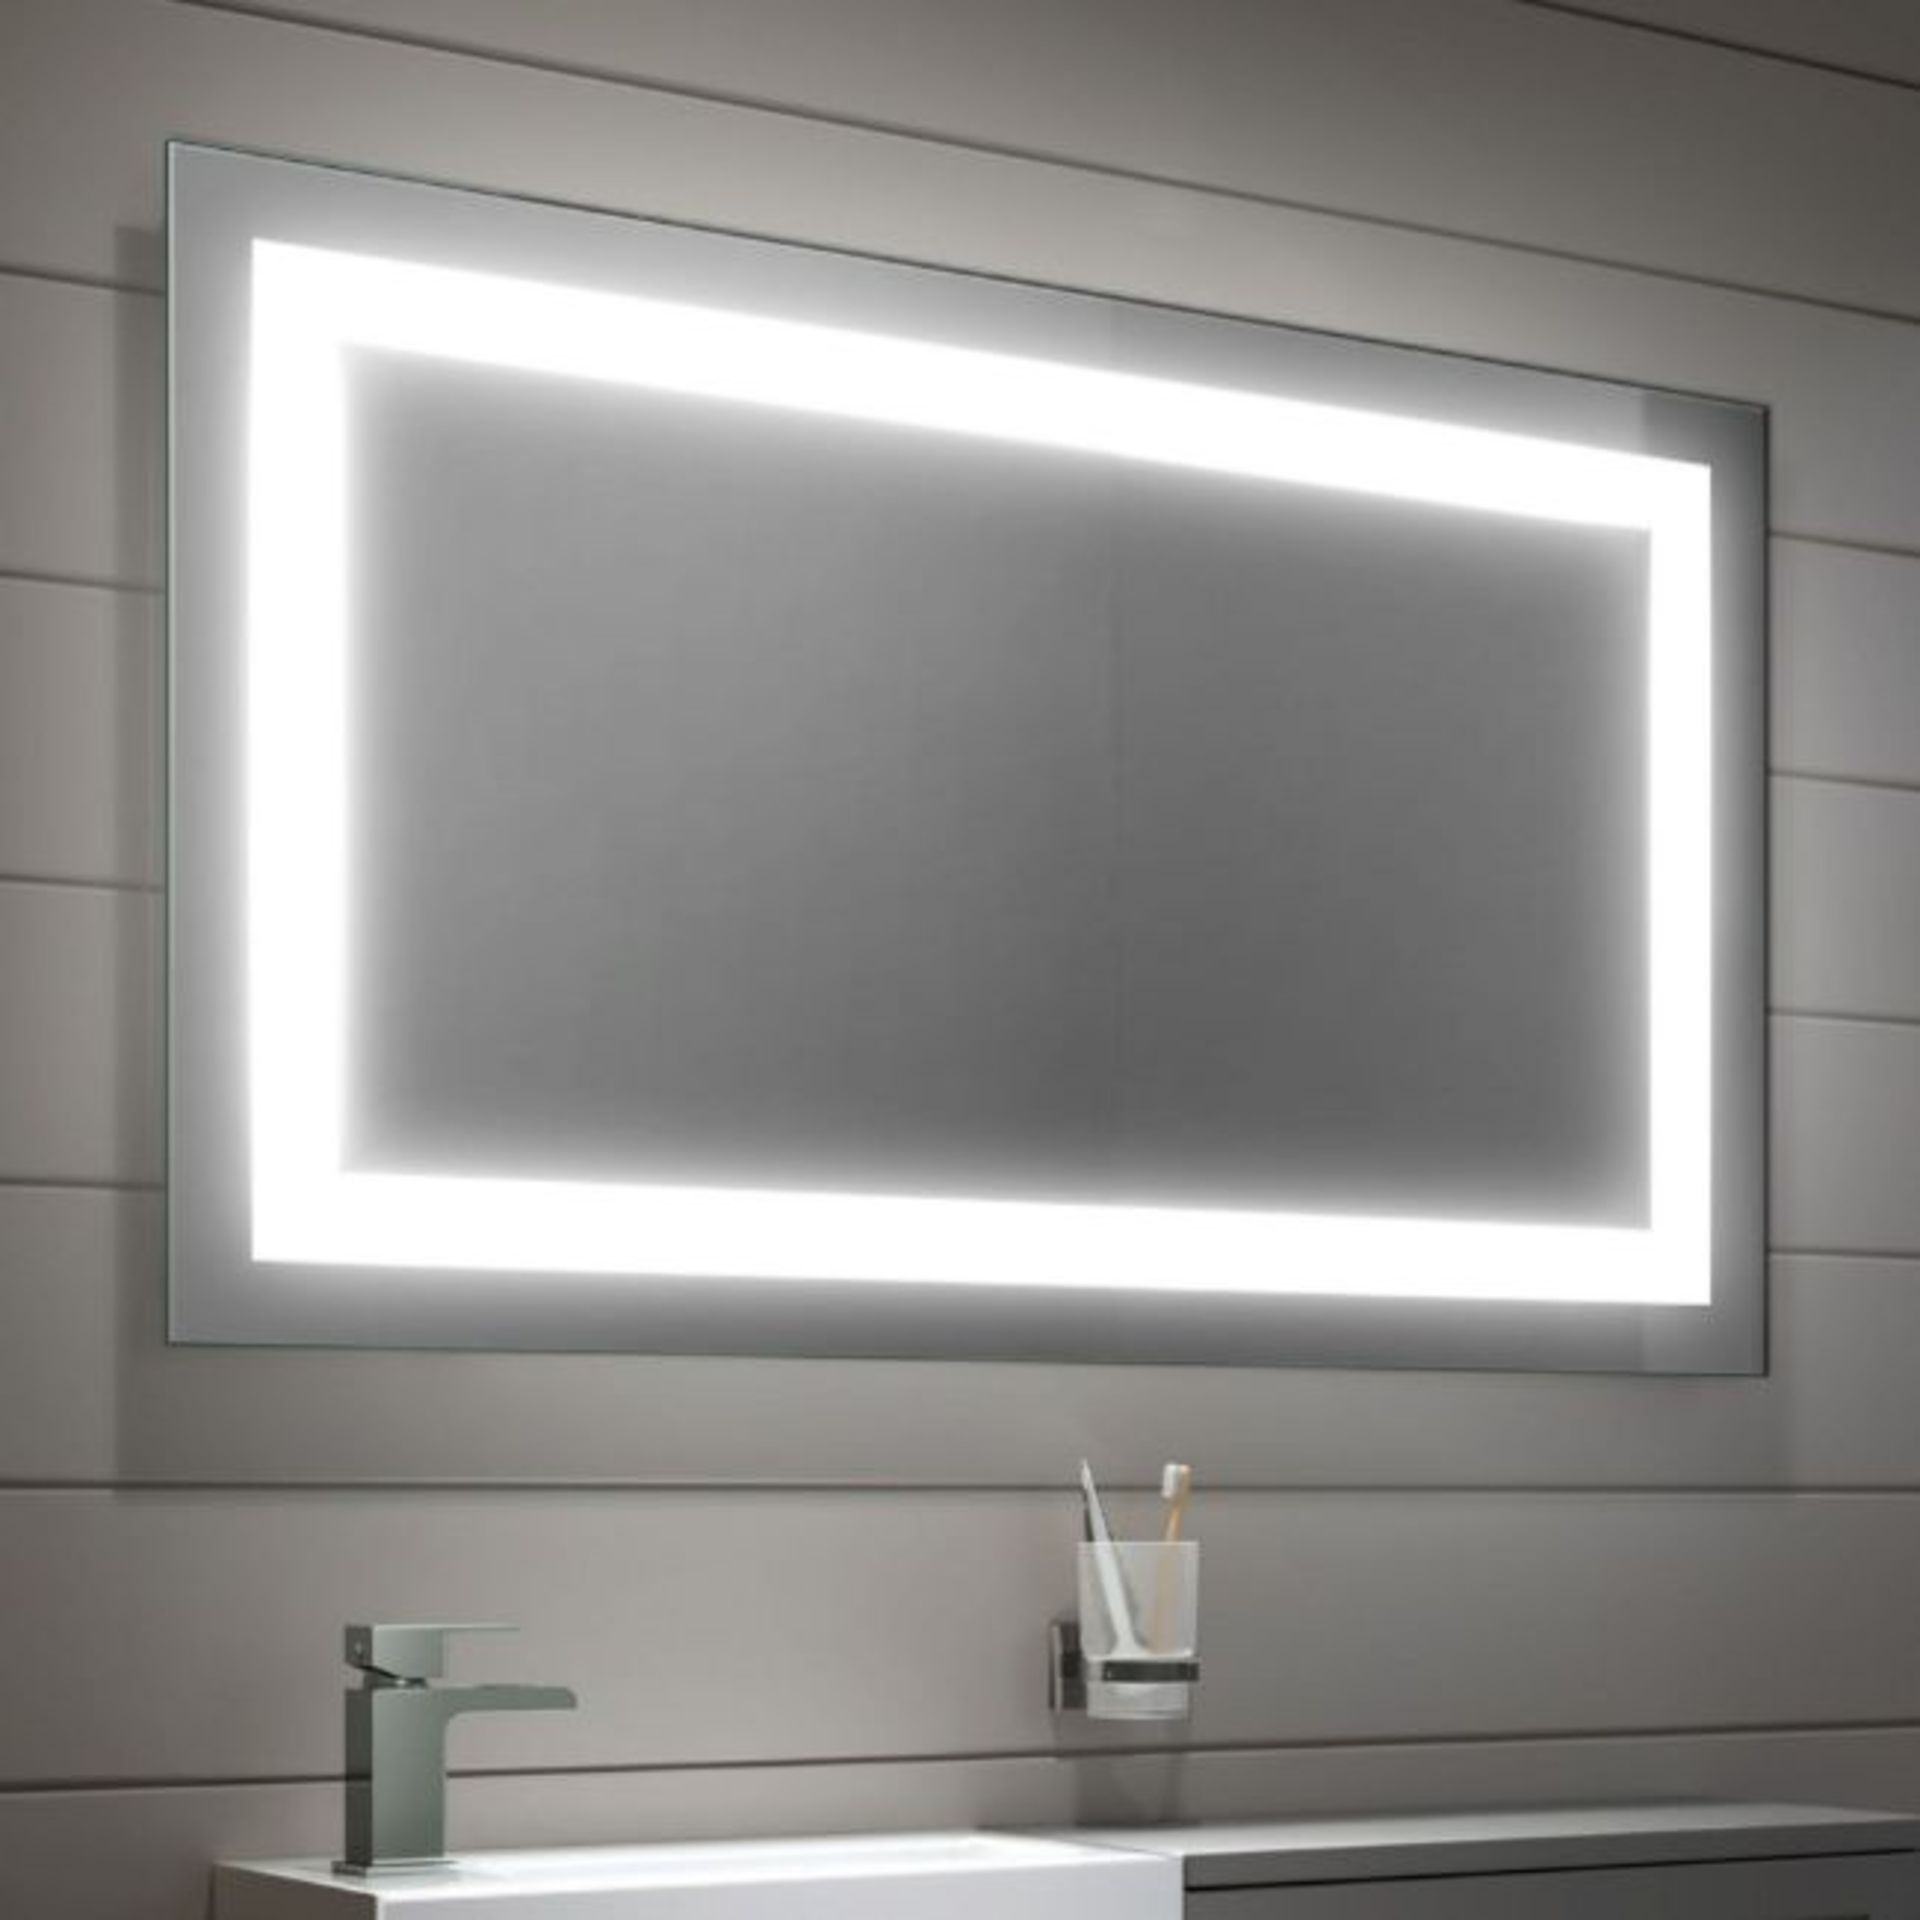 New 600x1000 Nova Illuminated LED Mirror. RRP £499.99. Ml7006.We Love This Mirror As It Prov...